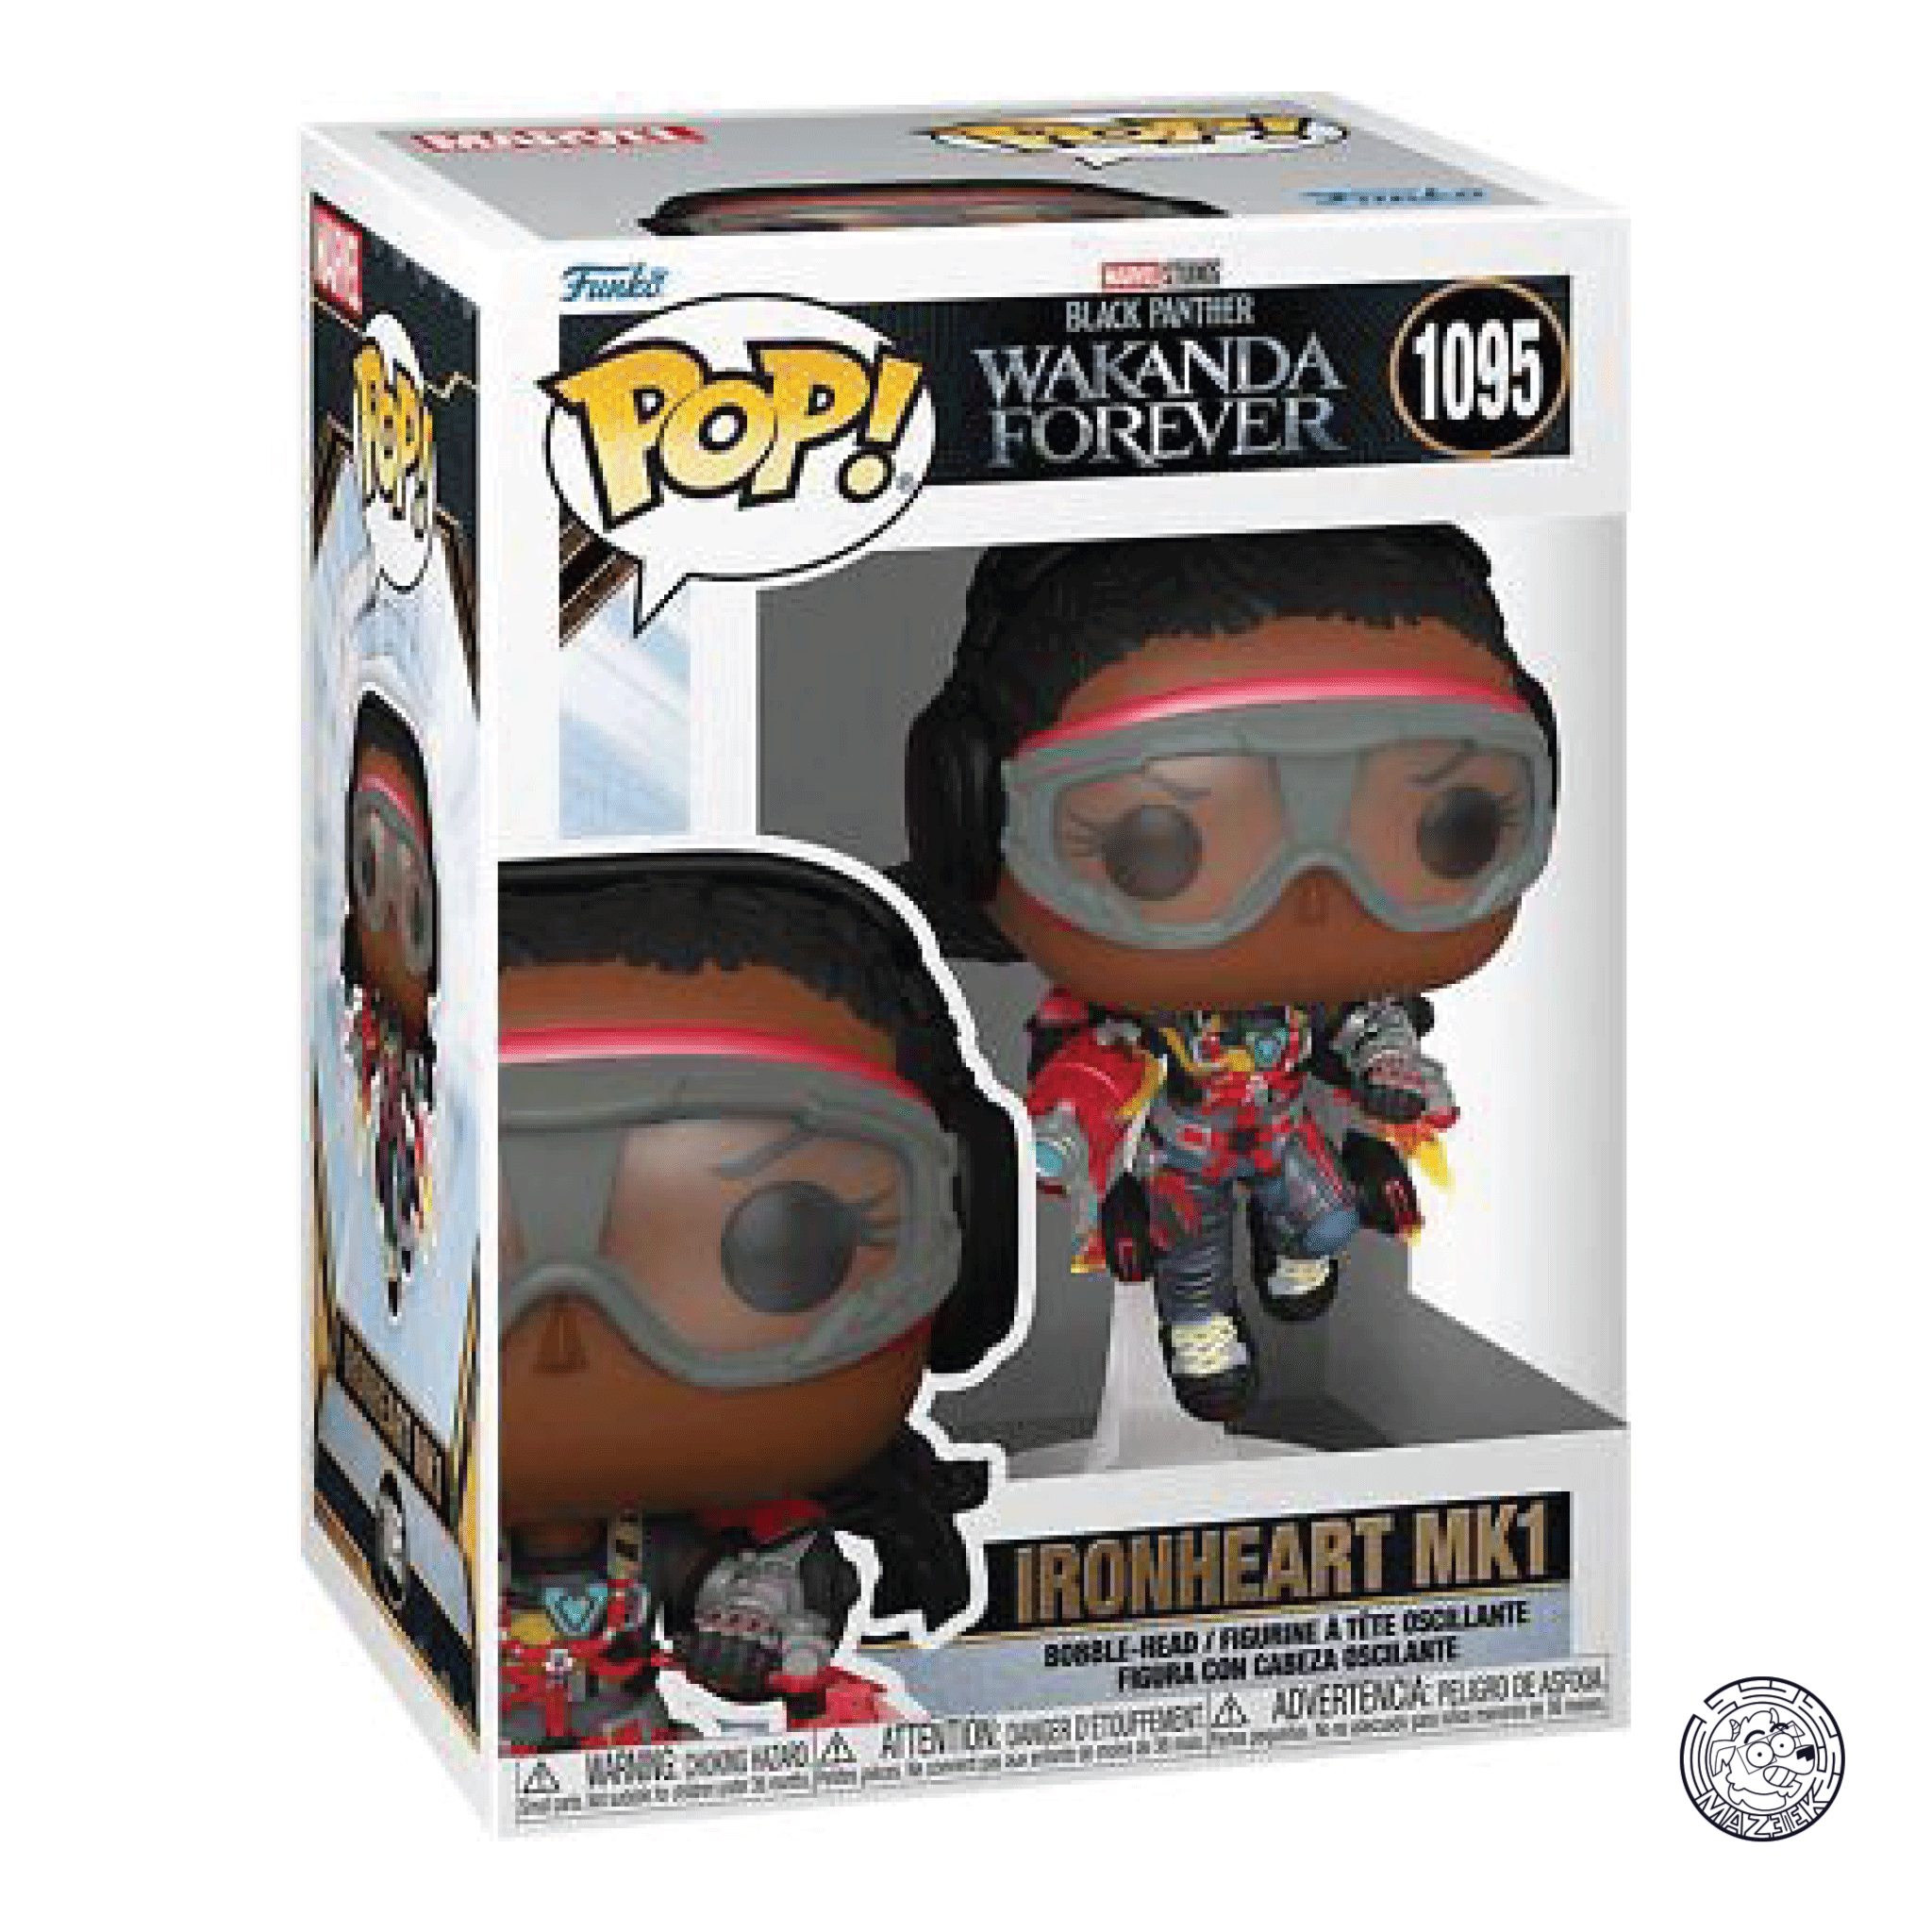 Funko POP! Black Panther Wakanda Forever: Ironheart MK1 1095